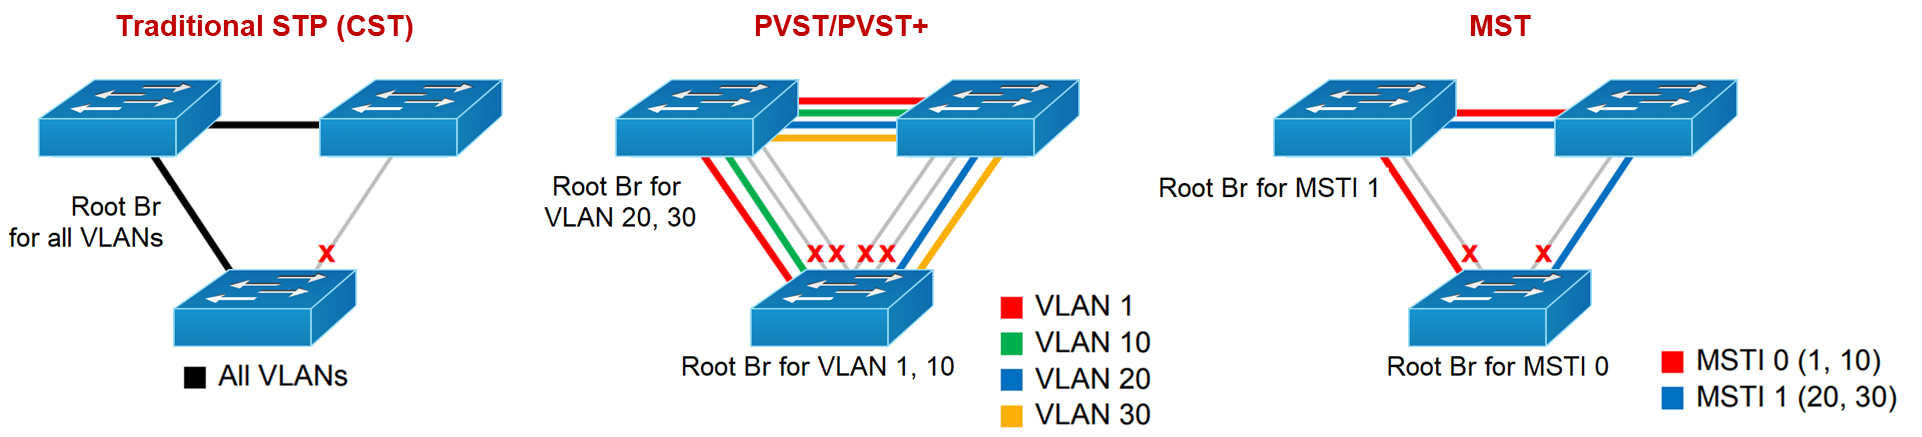 spanning-tree-protocol-versions-1